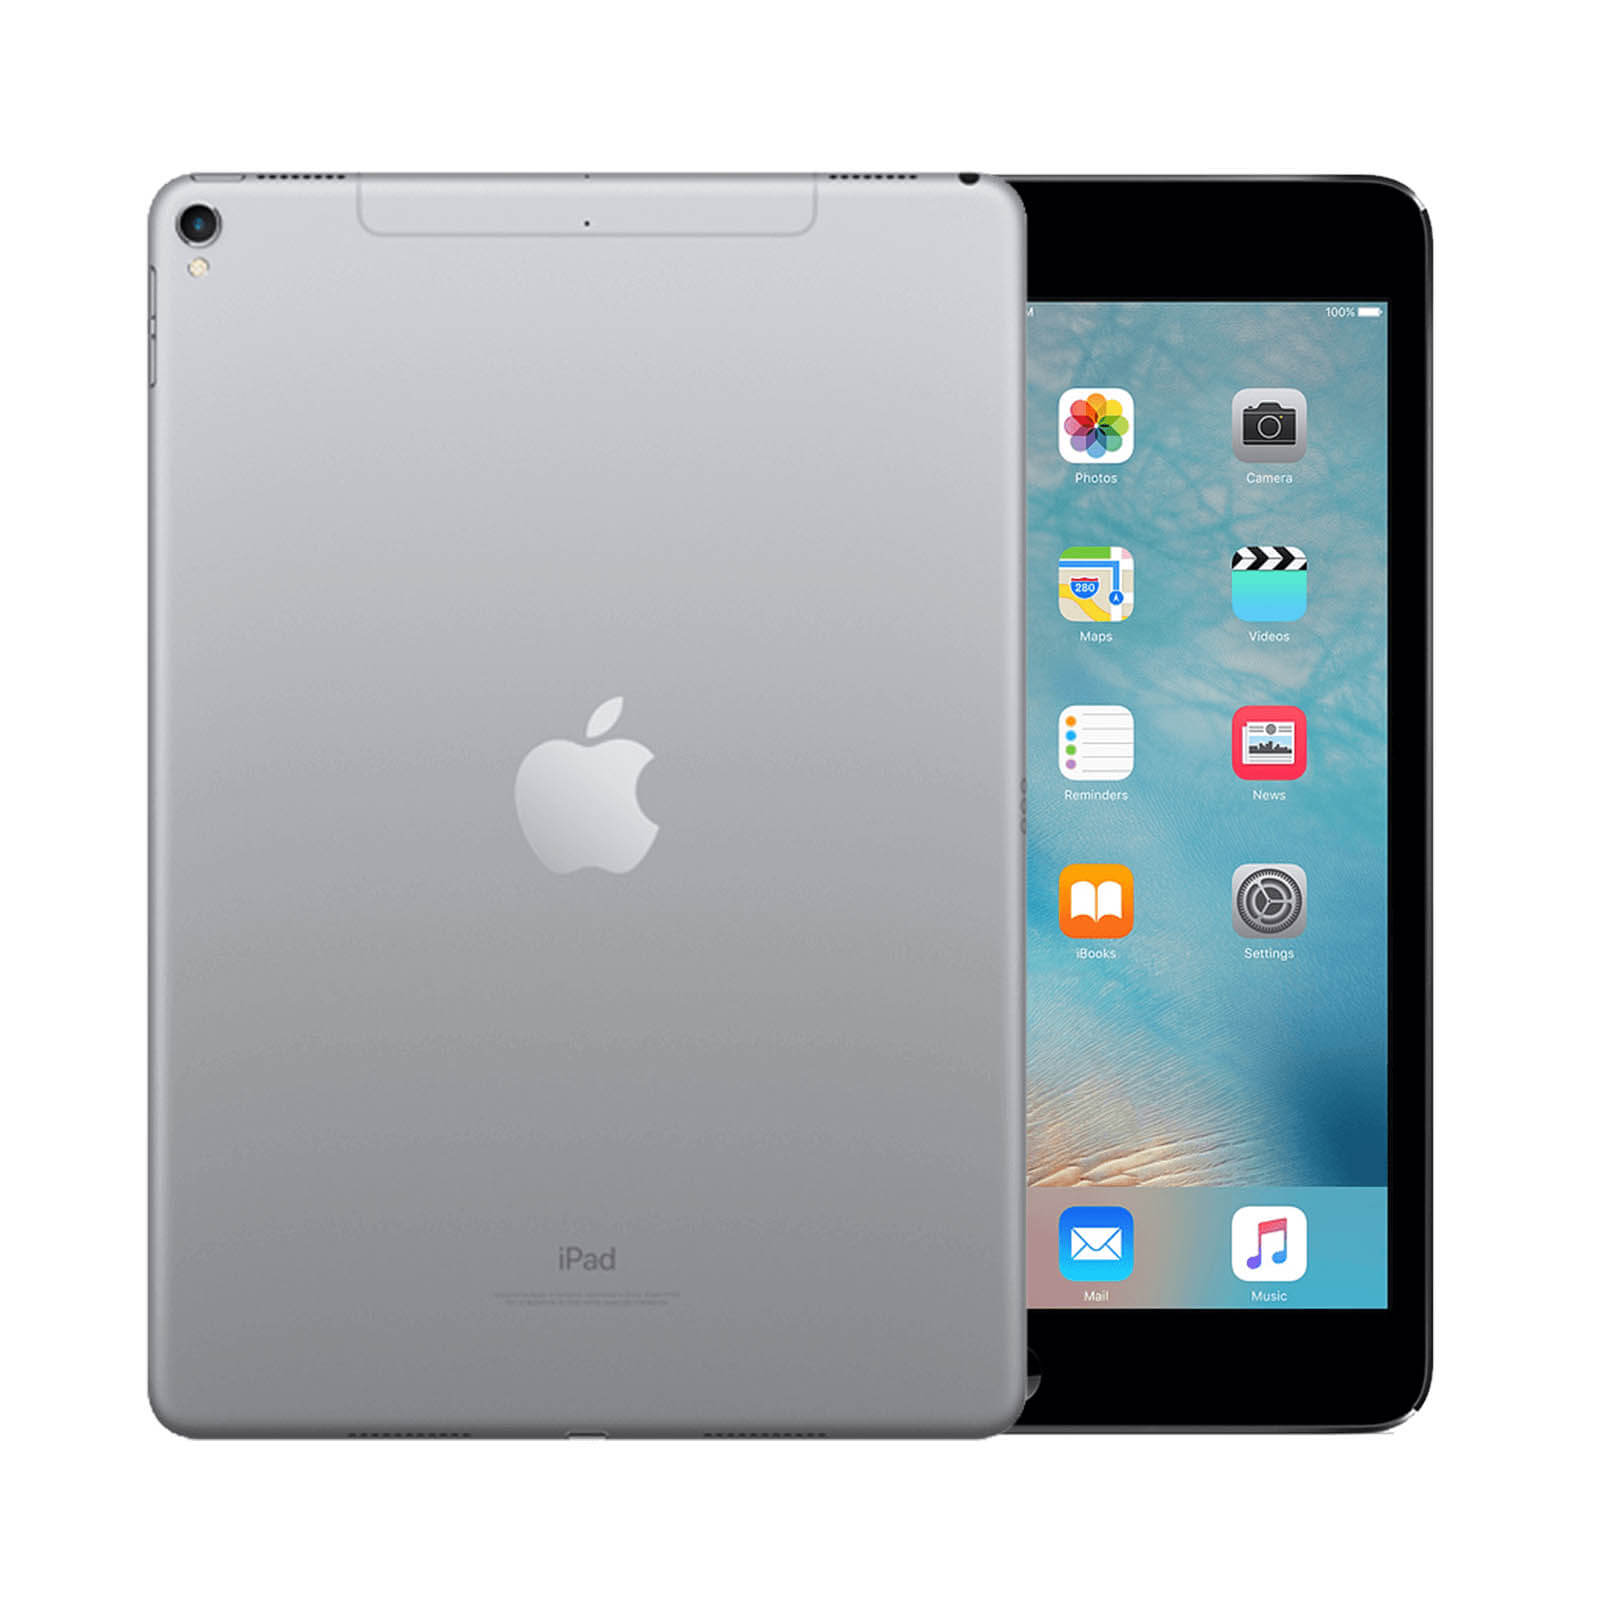 Apple iPad 128GB Ohne Vertrag - Space Grau - Makellos